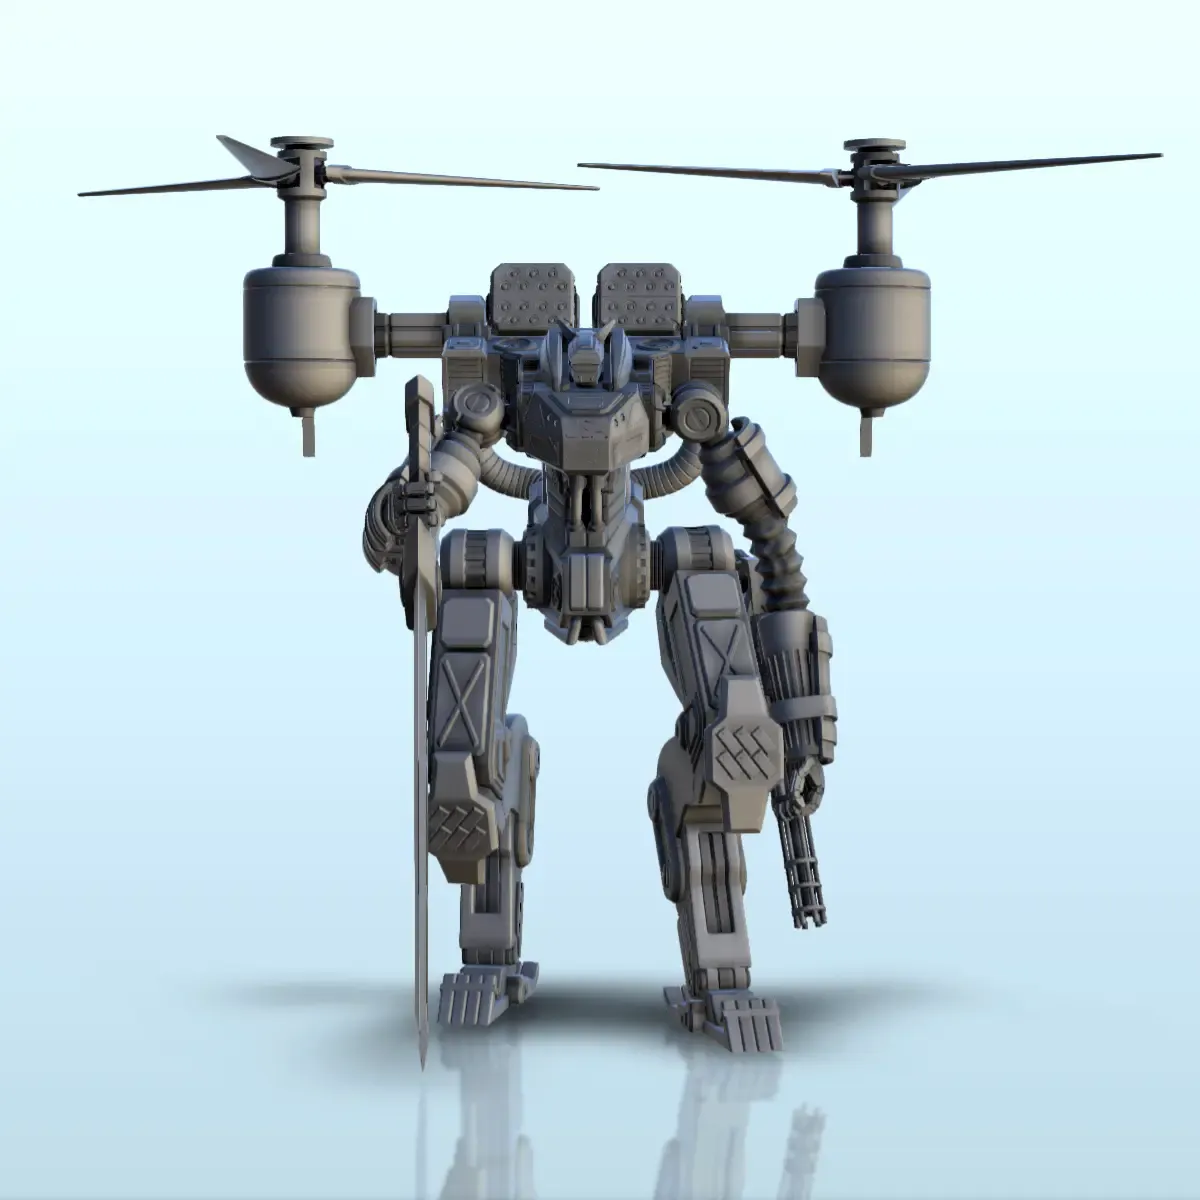 Ihris combat robot (6) - sci-fi science fiction future 40k b